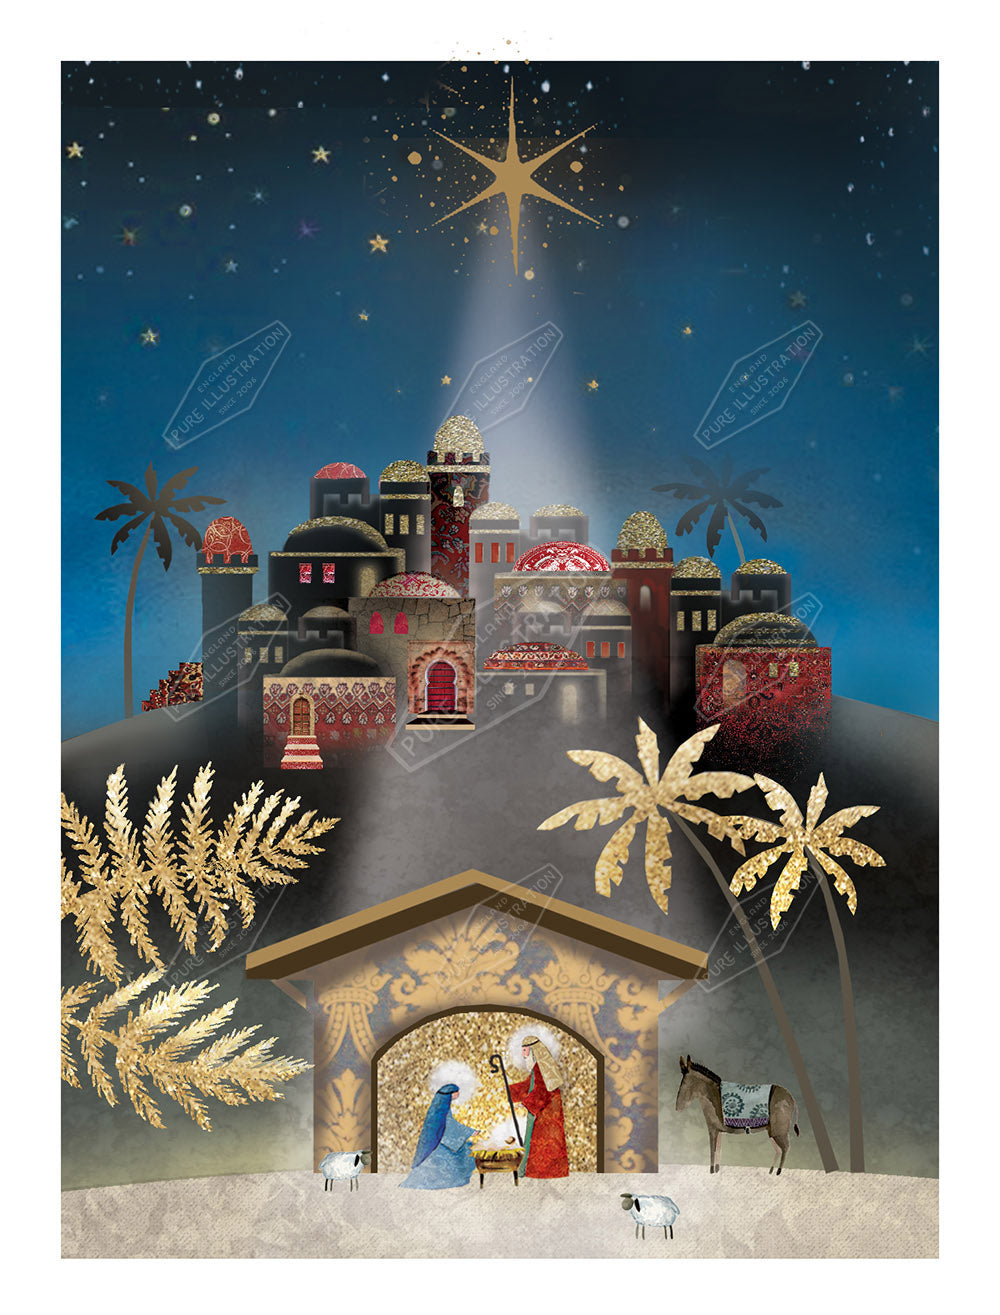 00025813DEVa - Deva Evans is represented by Pure Art Licensing Agency - Christmas Greeting Card Design